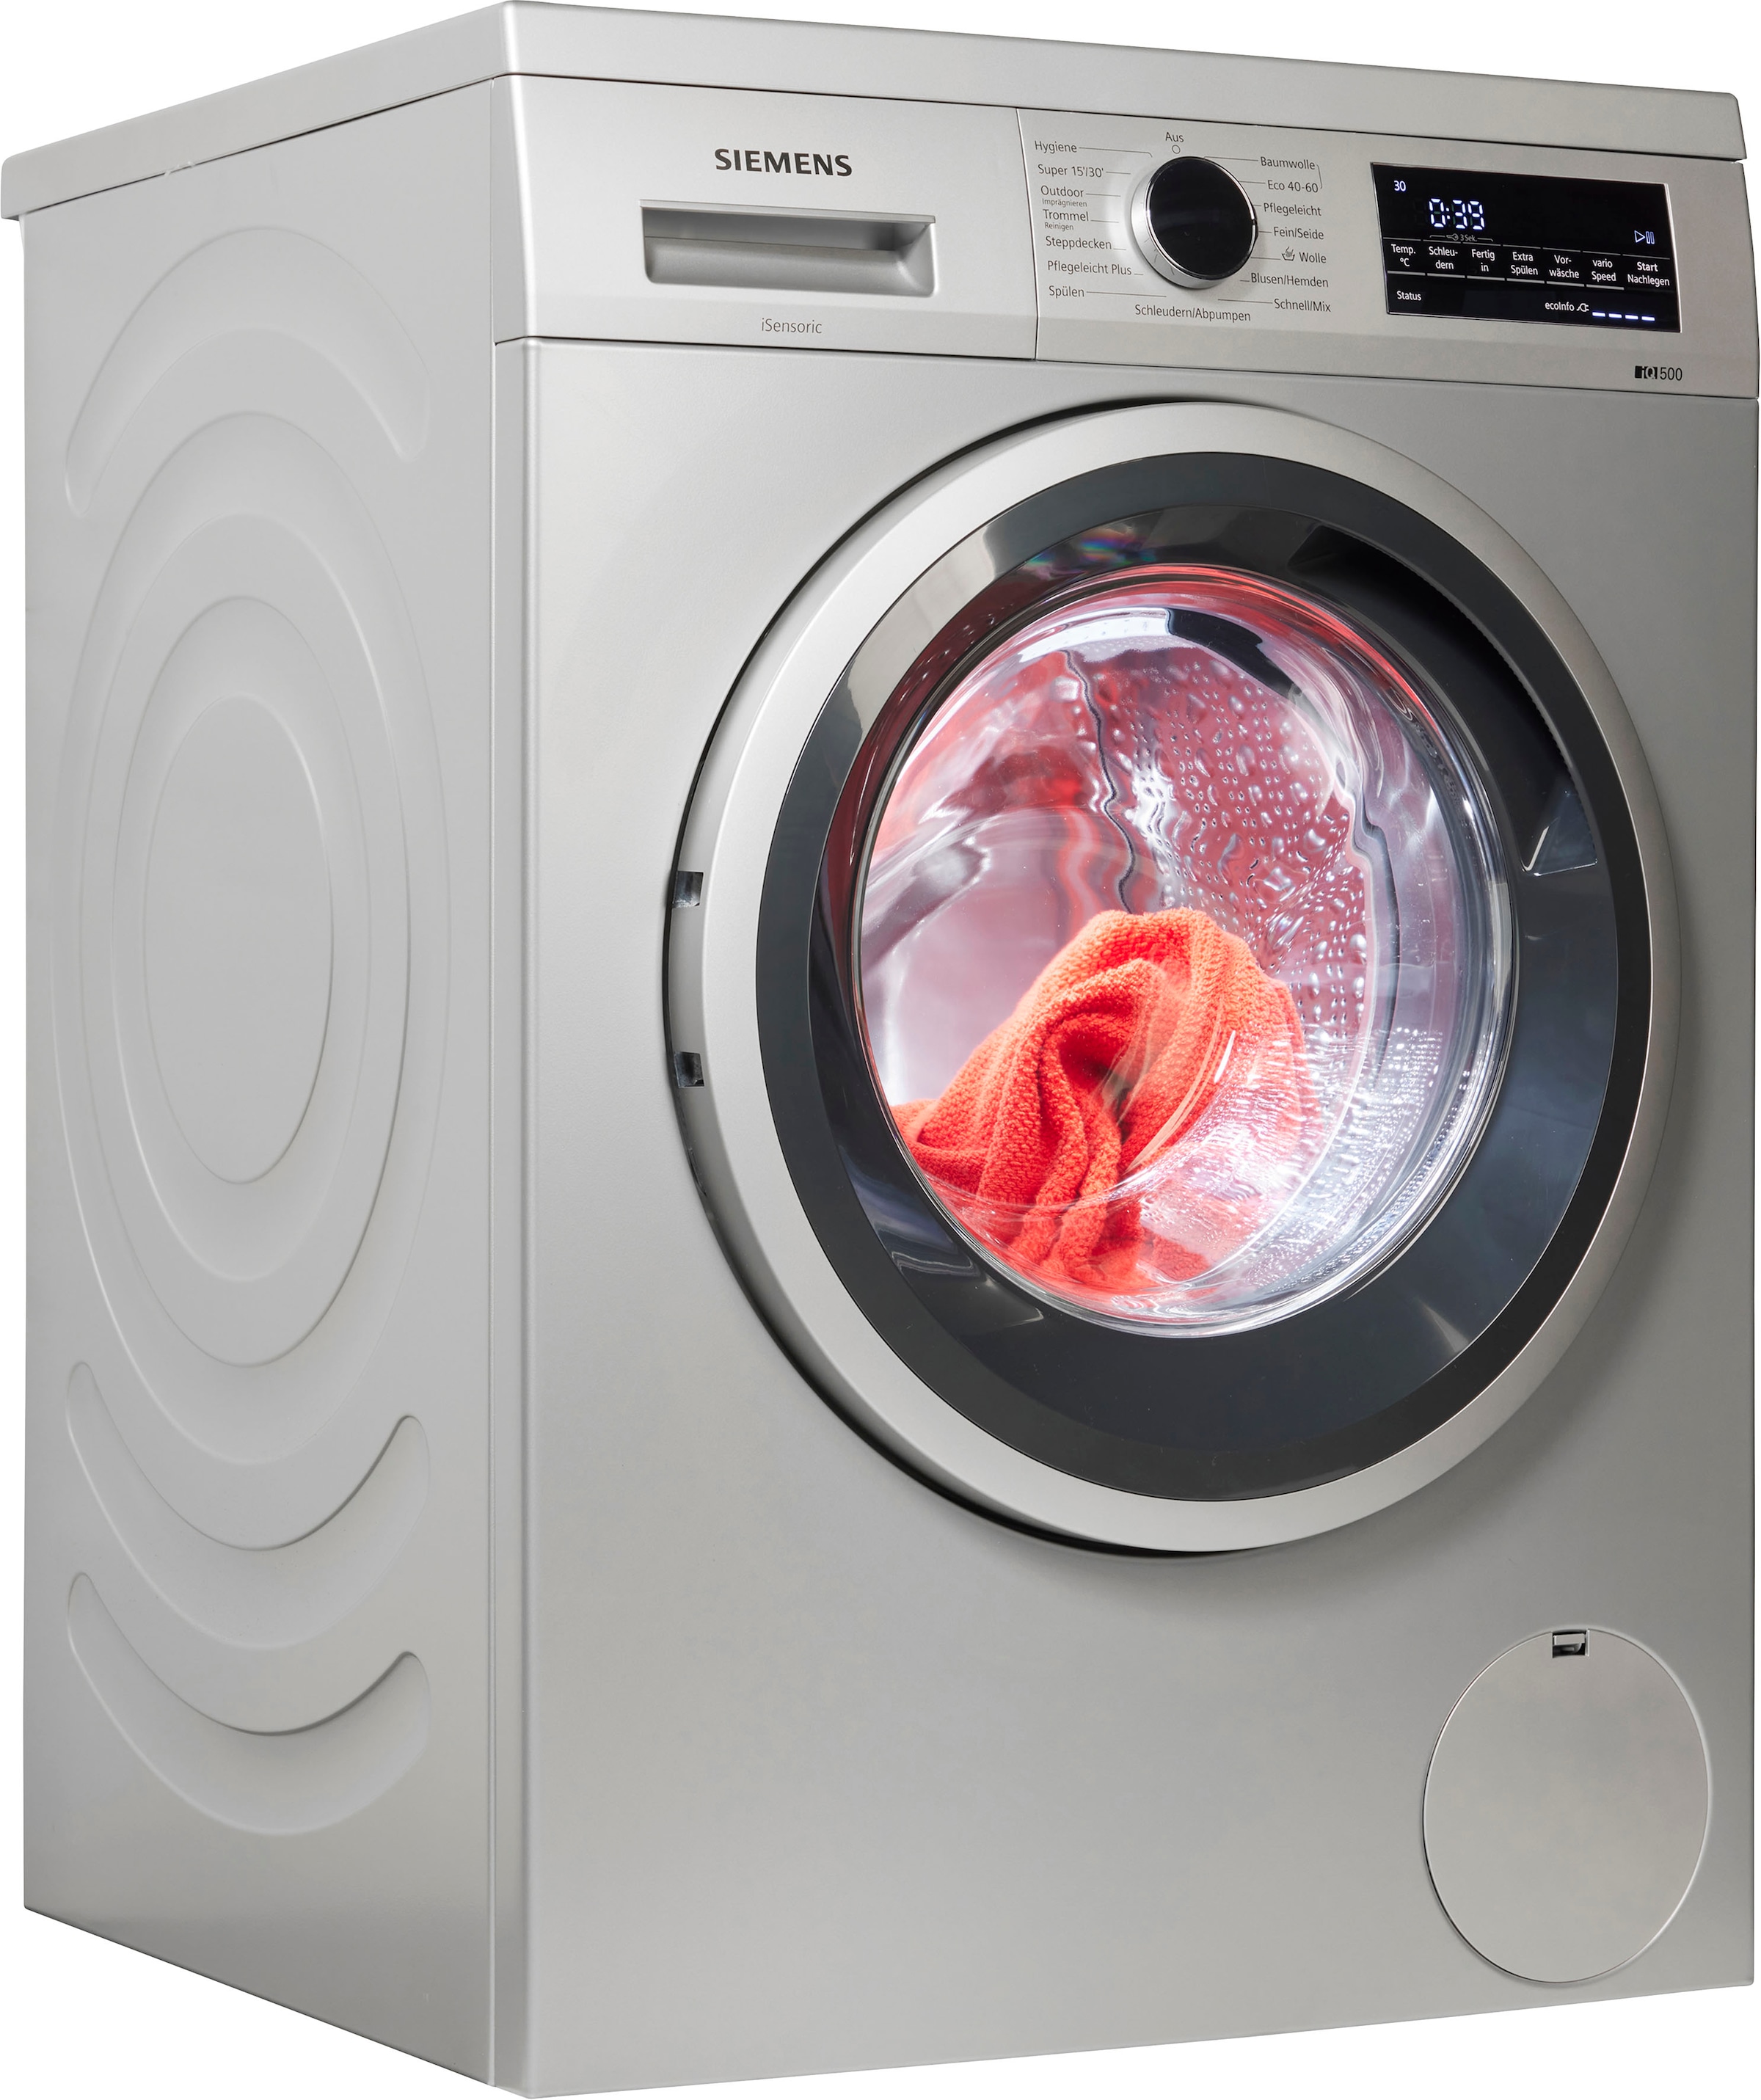 SIEMENS Waschmaschine 9 OTTO U/min kg, 1400 WU14UTS9, bei »WU14UTS9«, kaufen